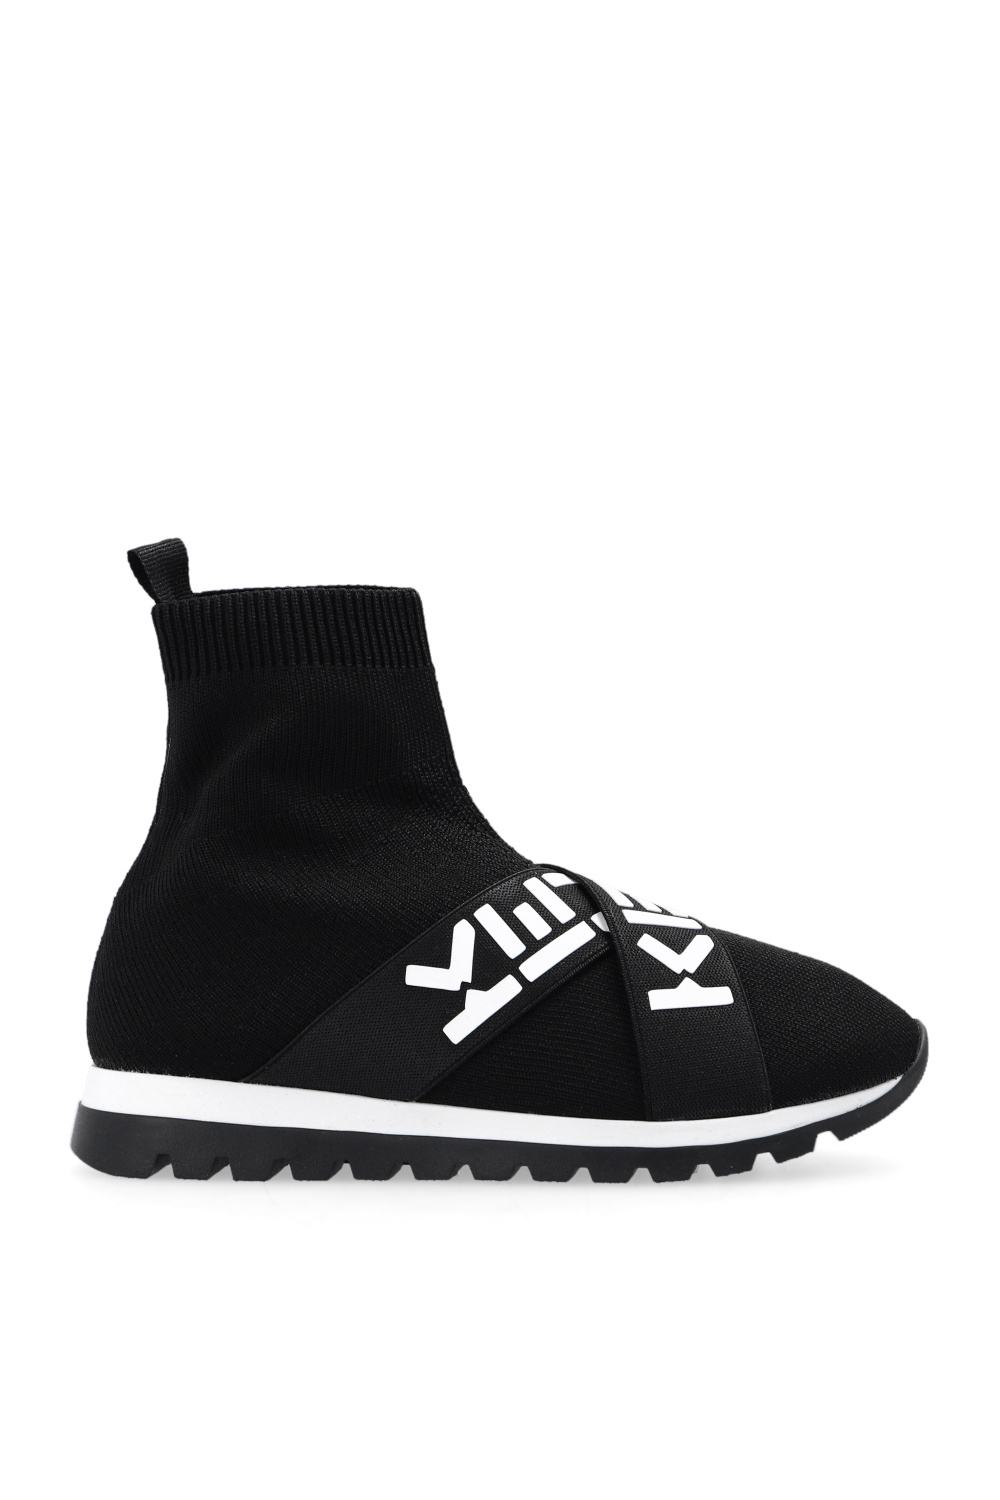 StclaircomoShops Bhutan - Sock sneakers Kenzo Kids - Gel-Quantum 180  low-top sneakers